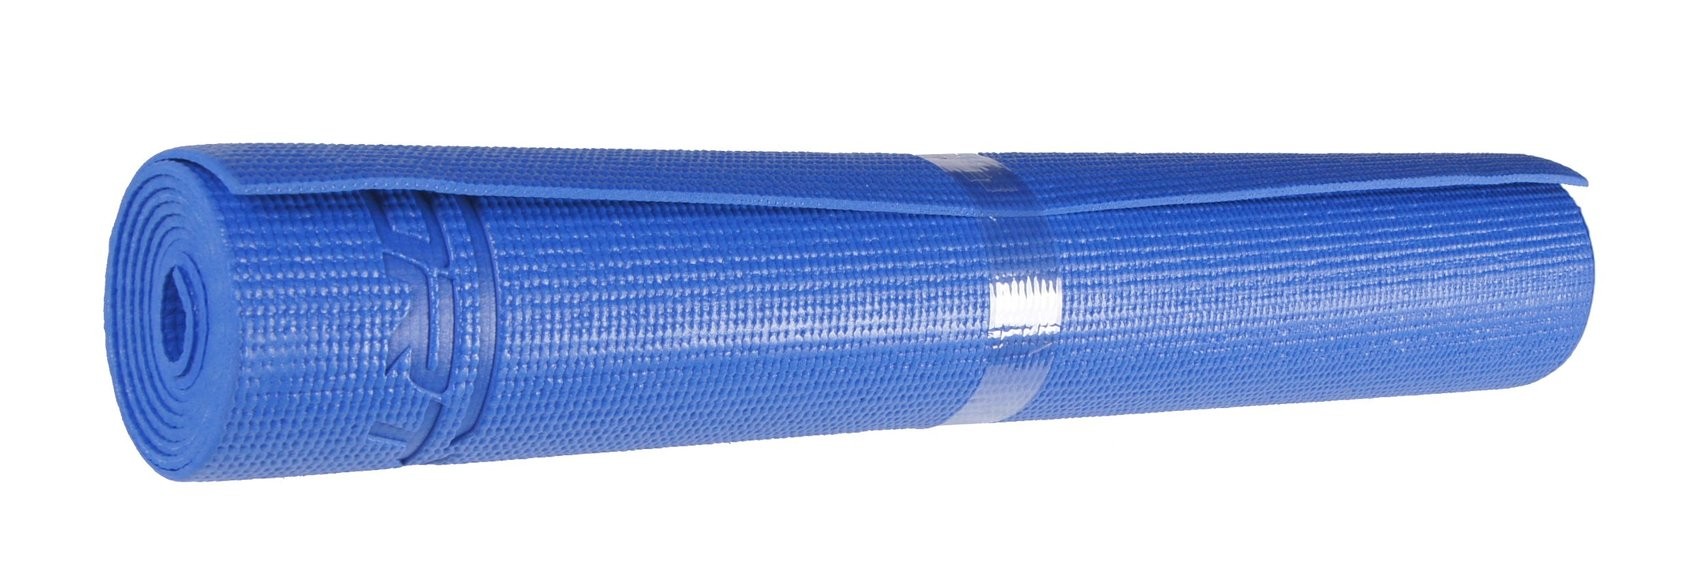 Килимок для йоги SportVida PVC 4 мм